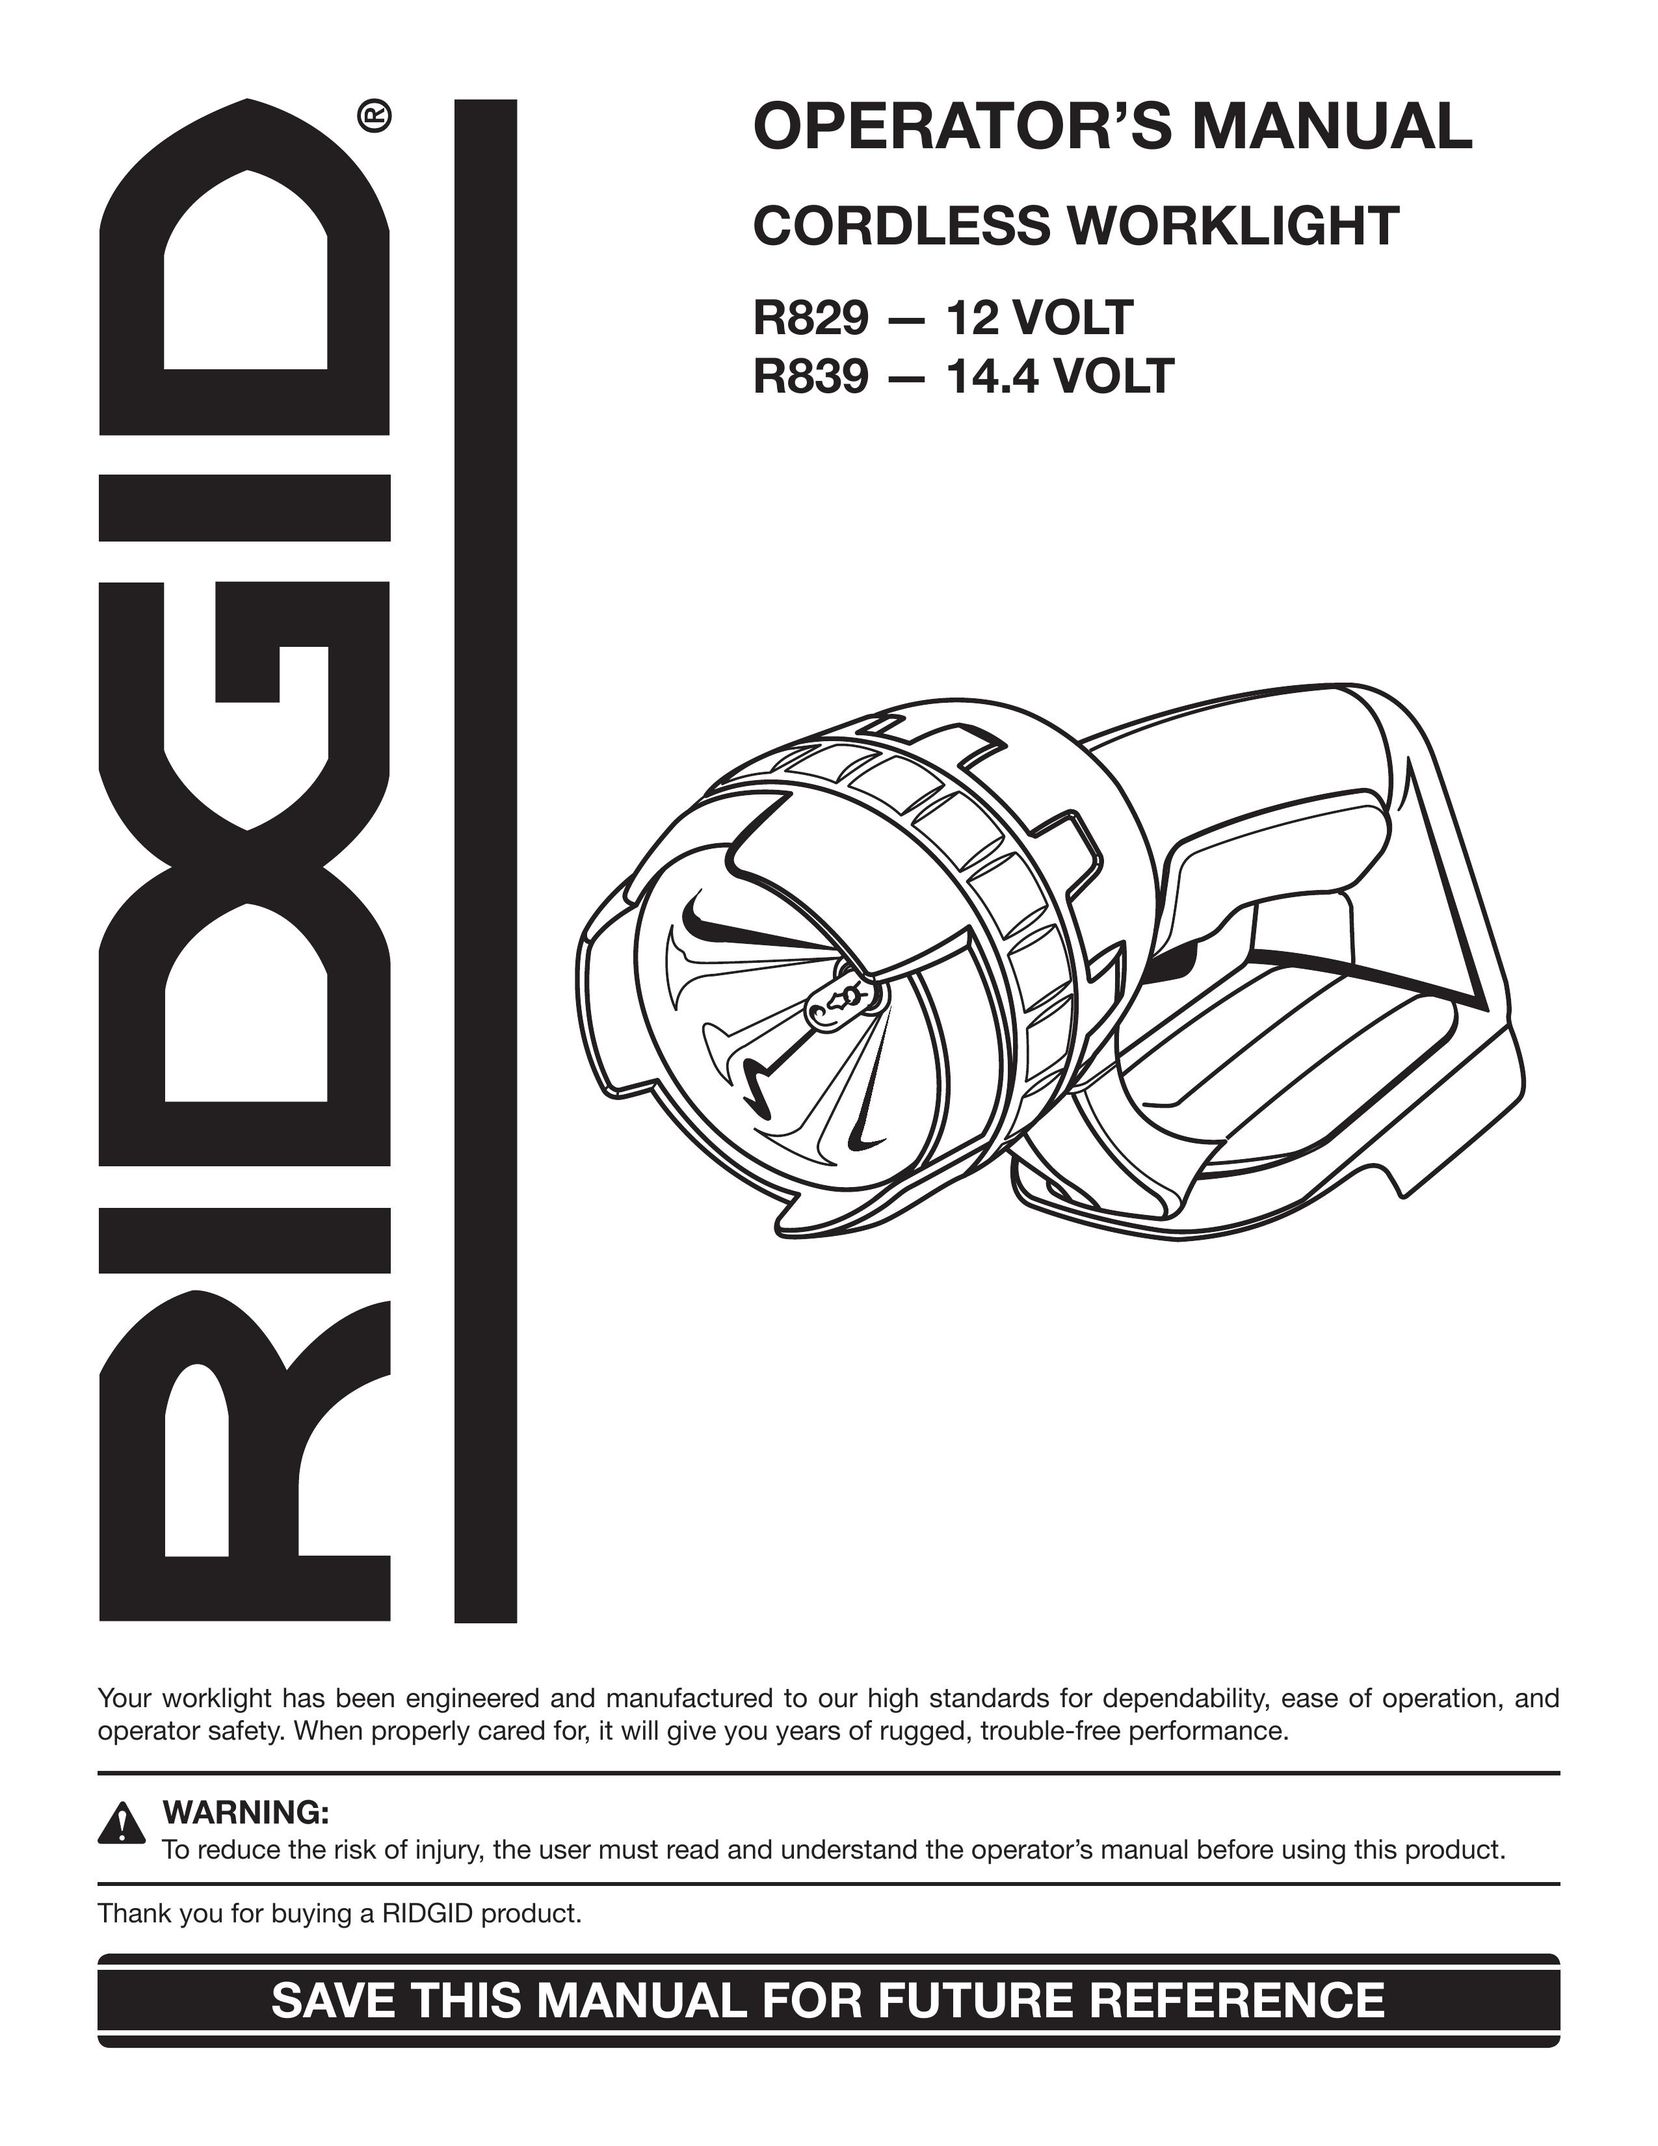 RIDGID R829 Work Light User Manual